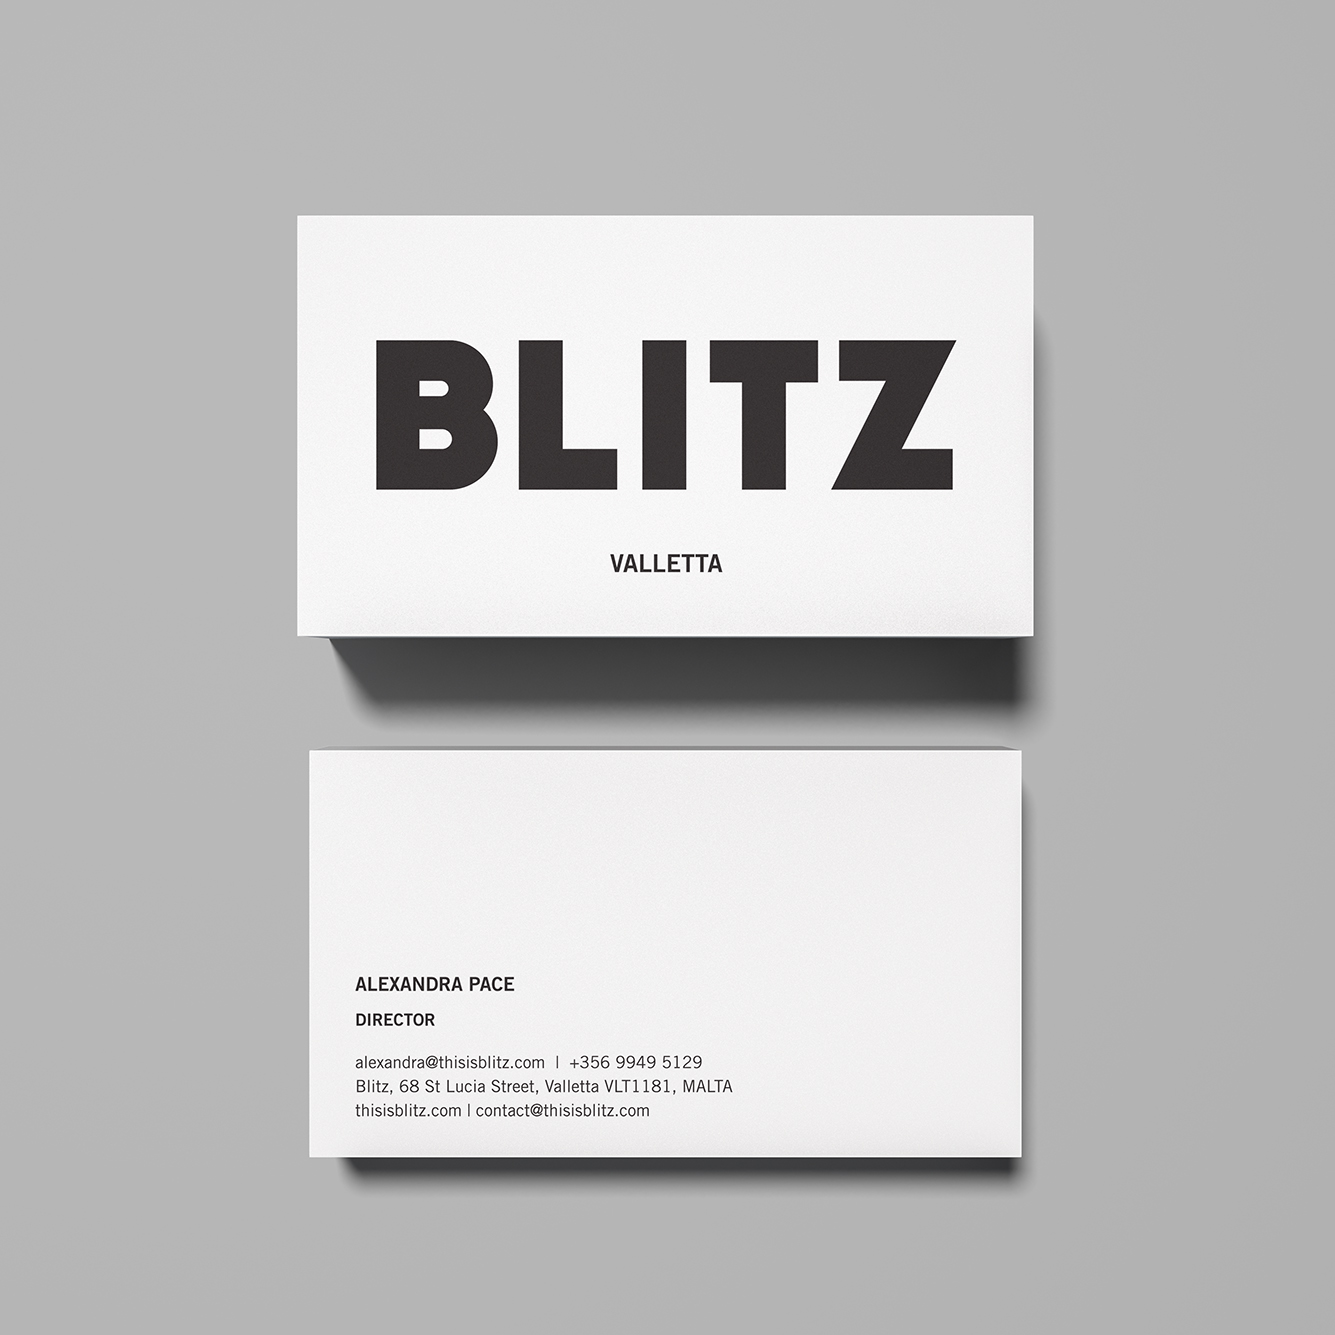 Blitz Valletta branding logo design by Alexandra Pace Studio